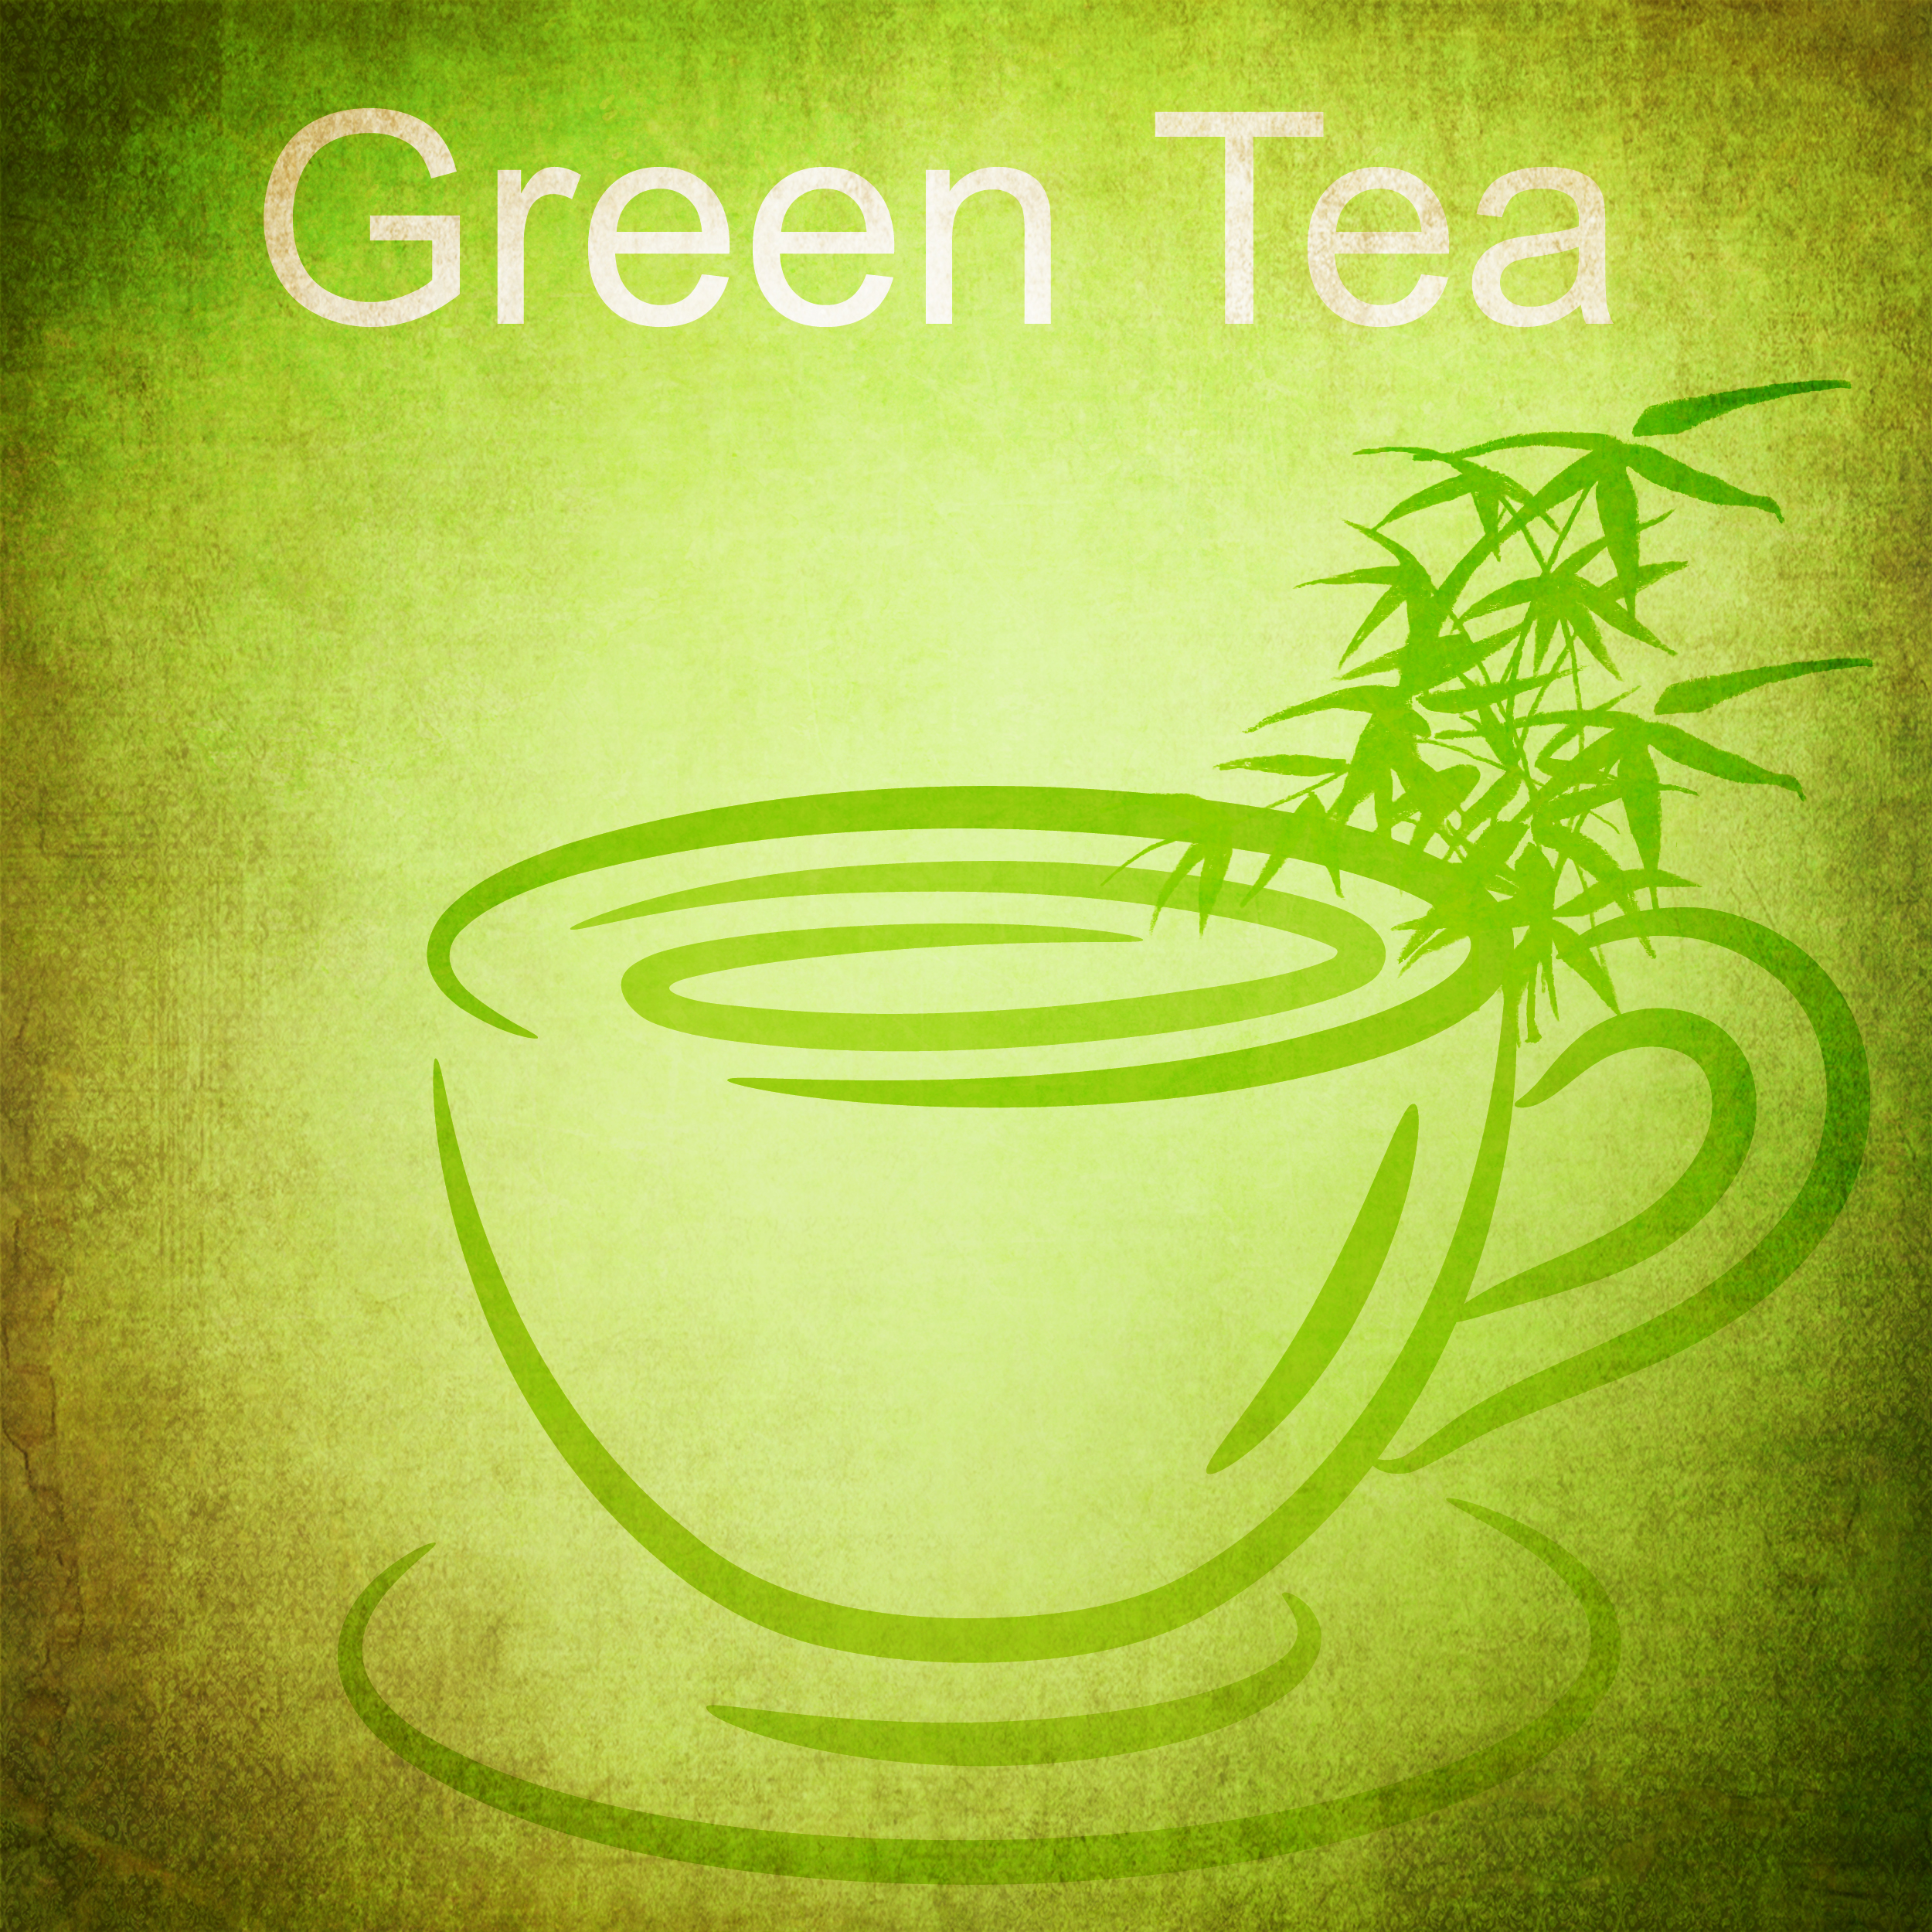 green tea benefits, health benefits of green tea, matcha green tea benefits, benefits of drinking green tea